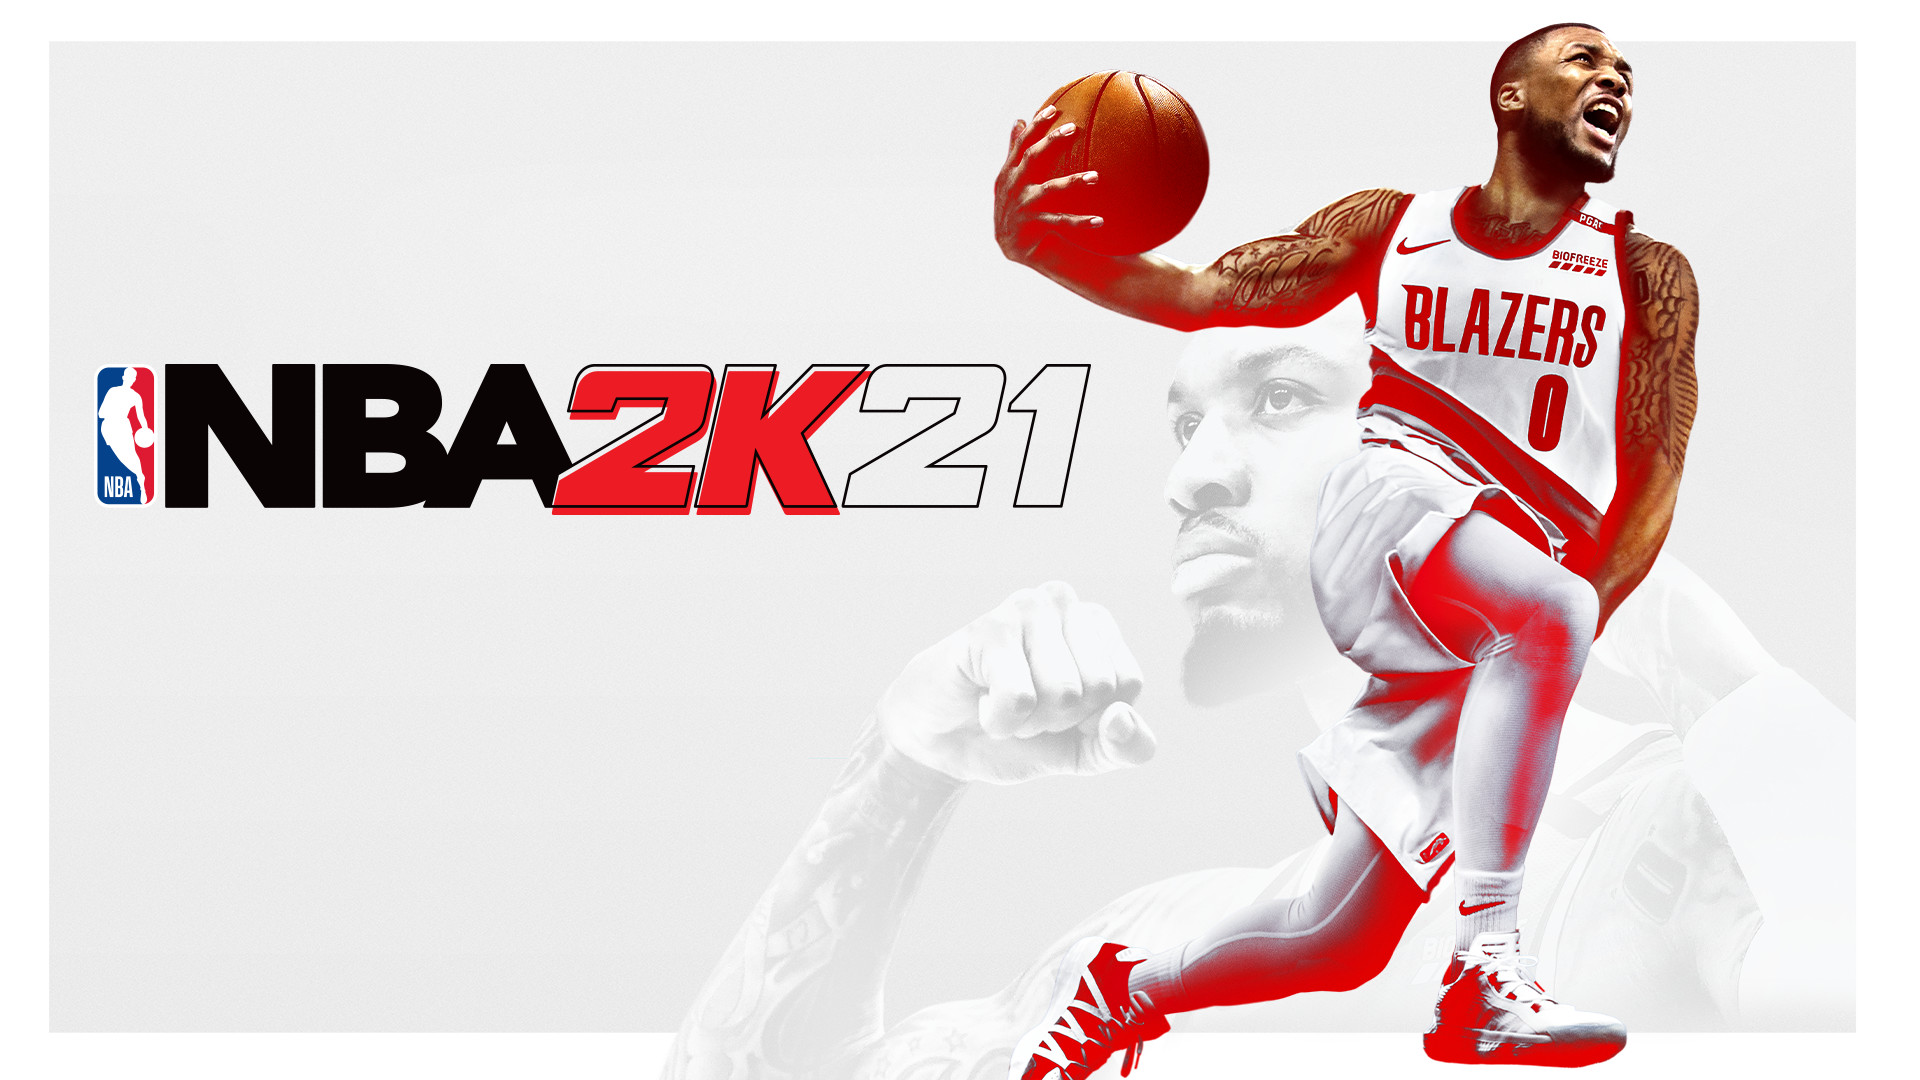 NBA 2K21 on Steam